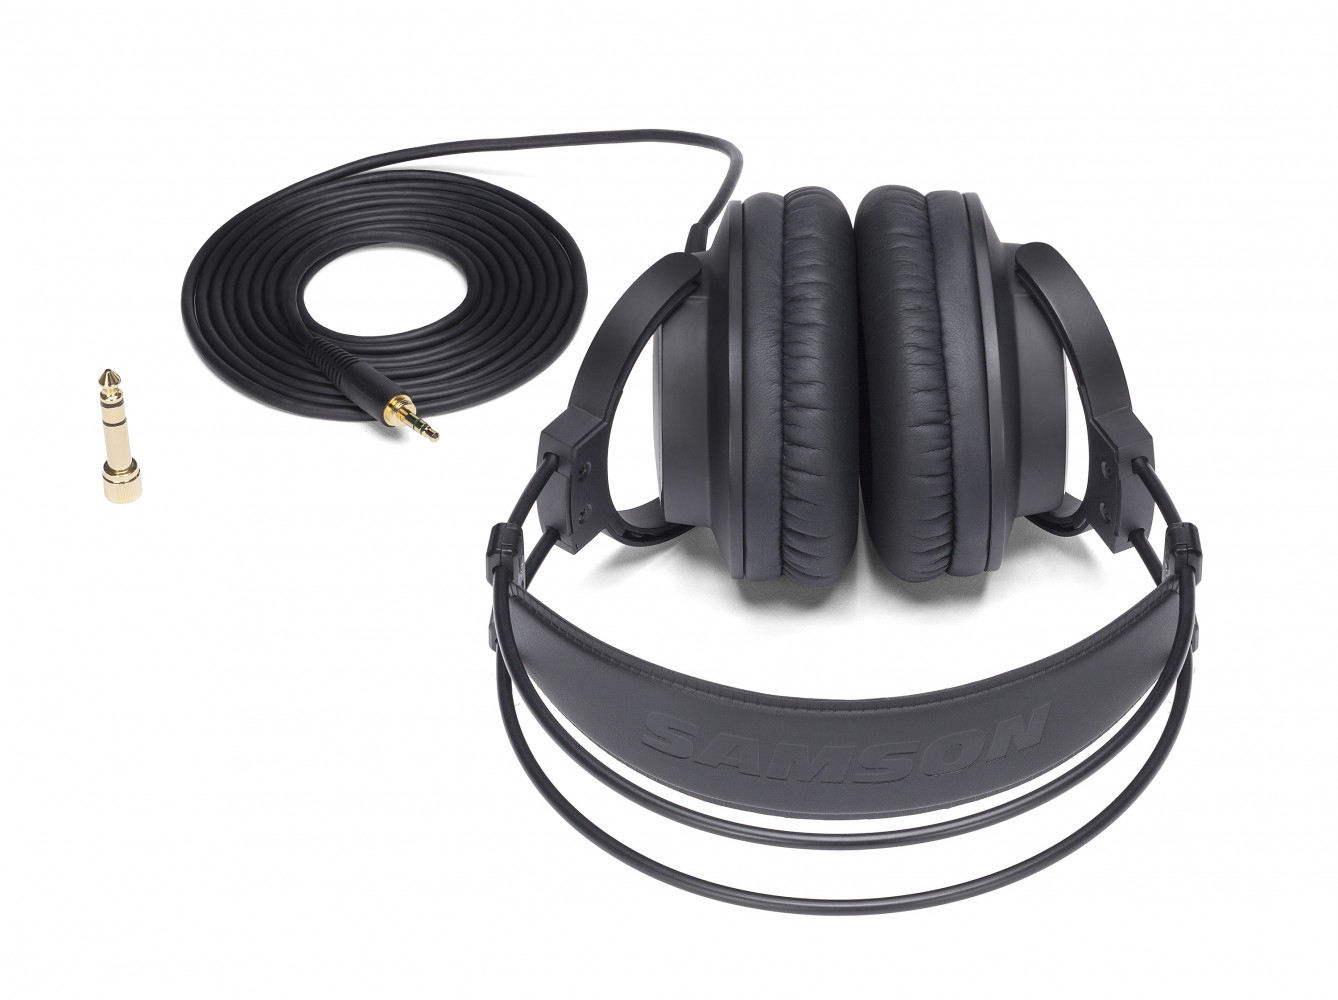 Samson SR880 Closed-Back Studio Headphones